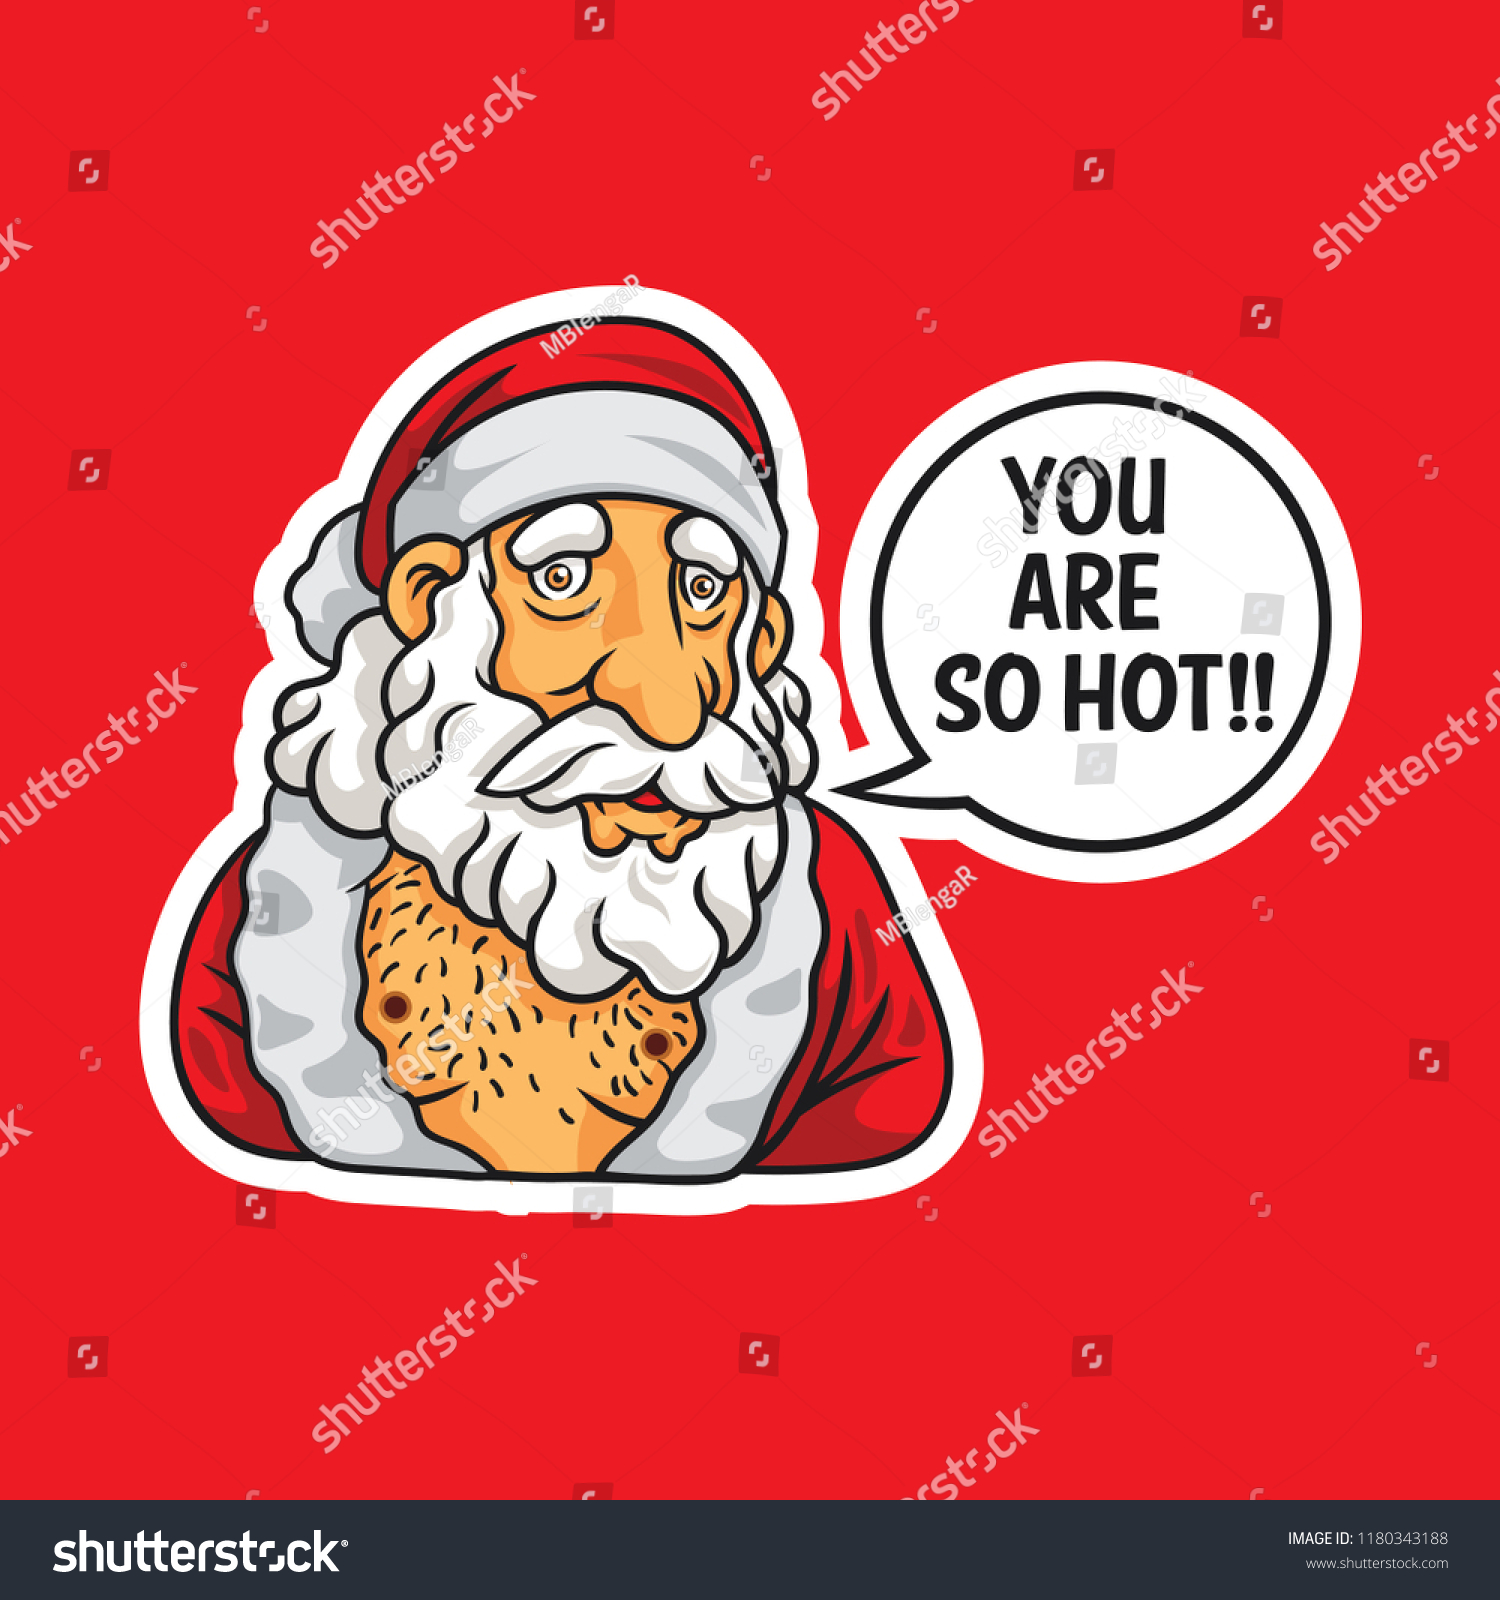 You Hotsexy Santa Claus Vector Illustration Stock Vector Royalty